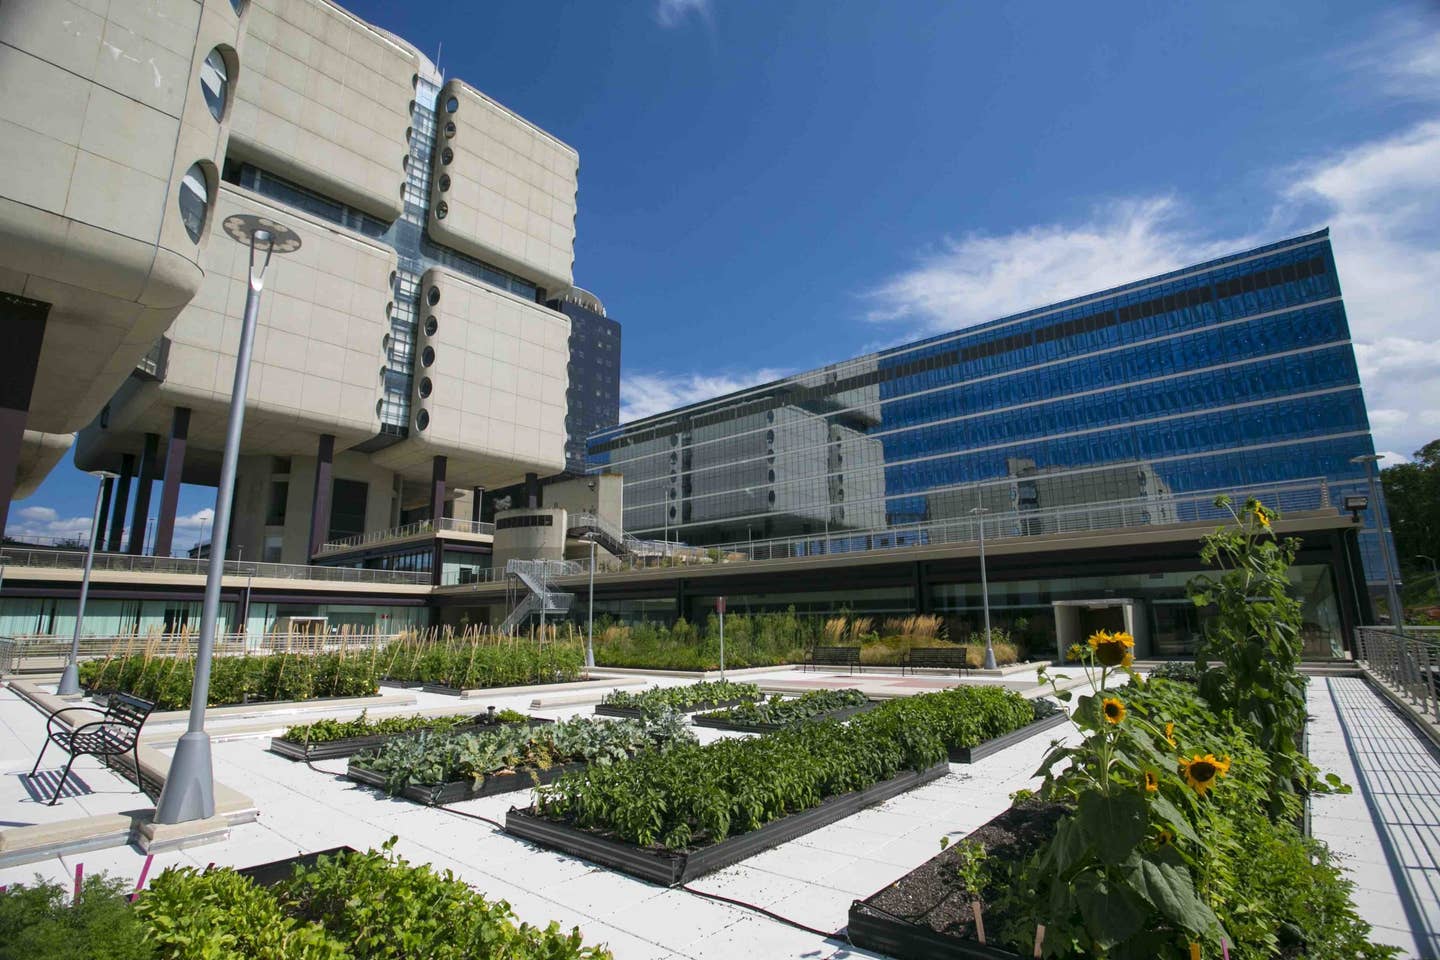 Stony Brook, NY; Stony Brook University Medical Center: Stony Brook Heights Rooftop Farm is located on the third floor roof of the Health Sciences Center.